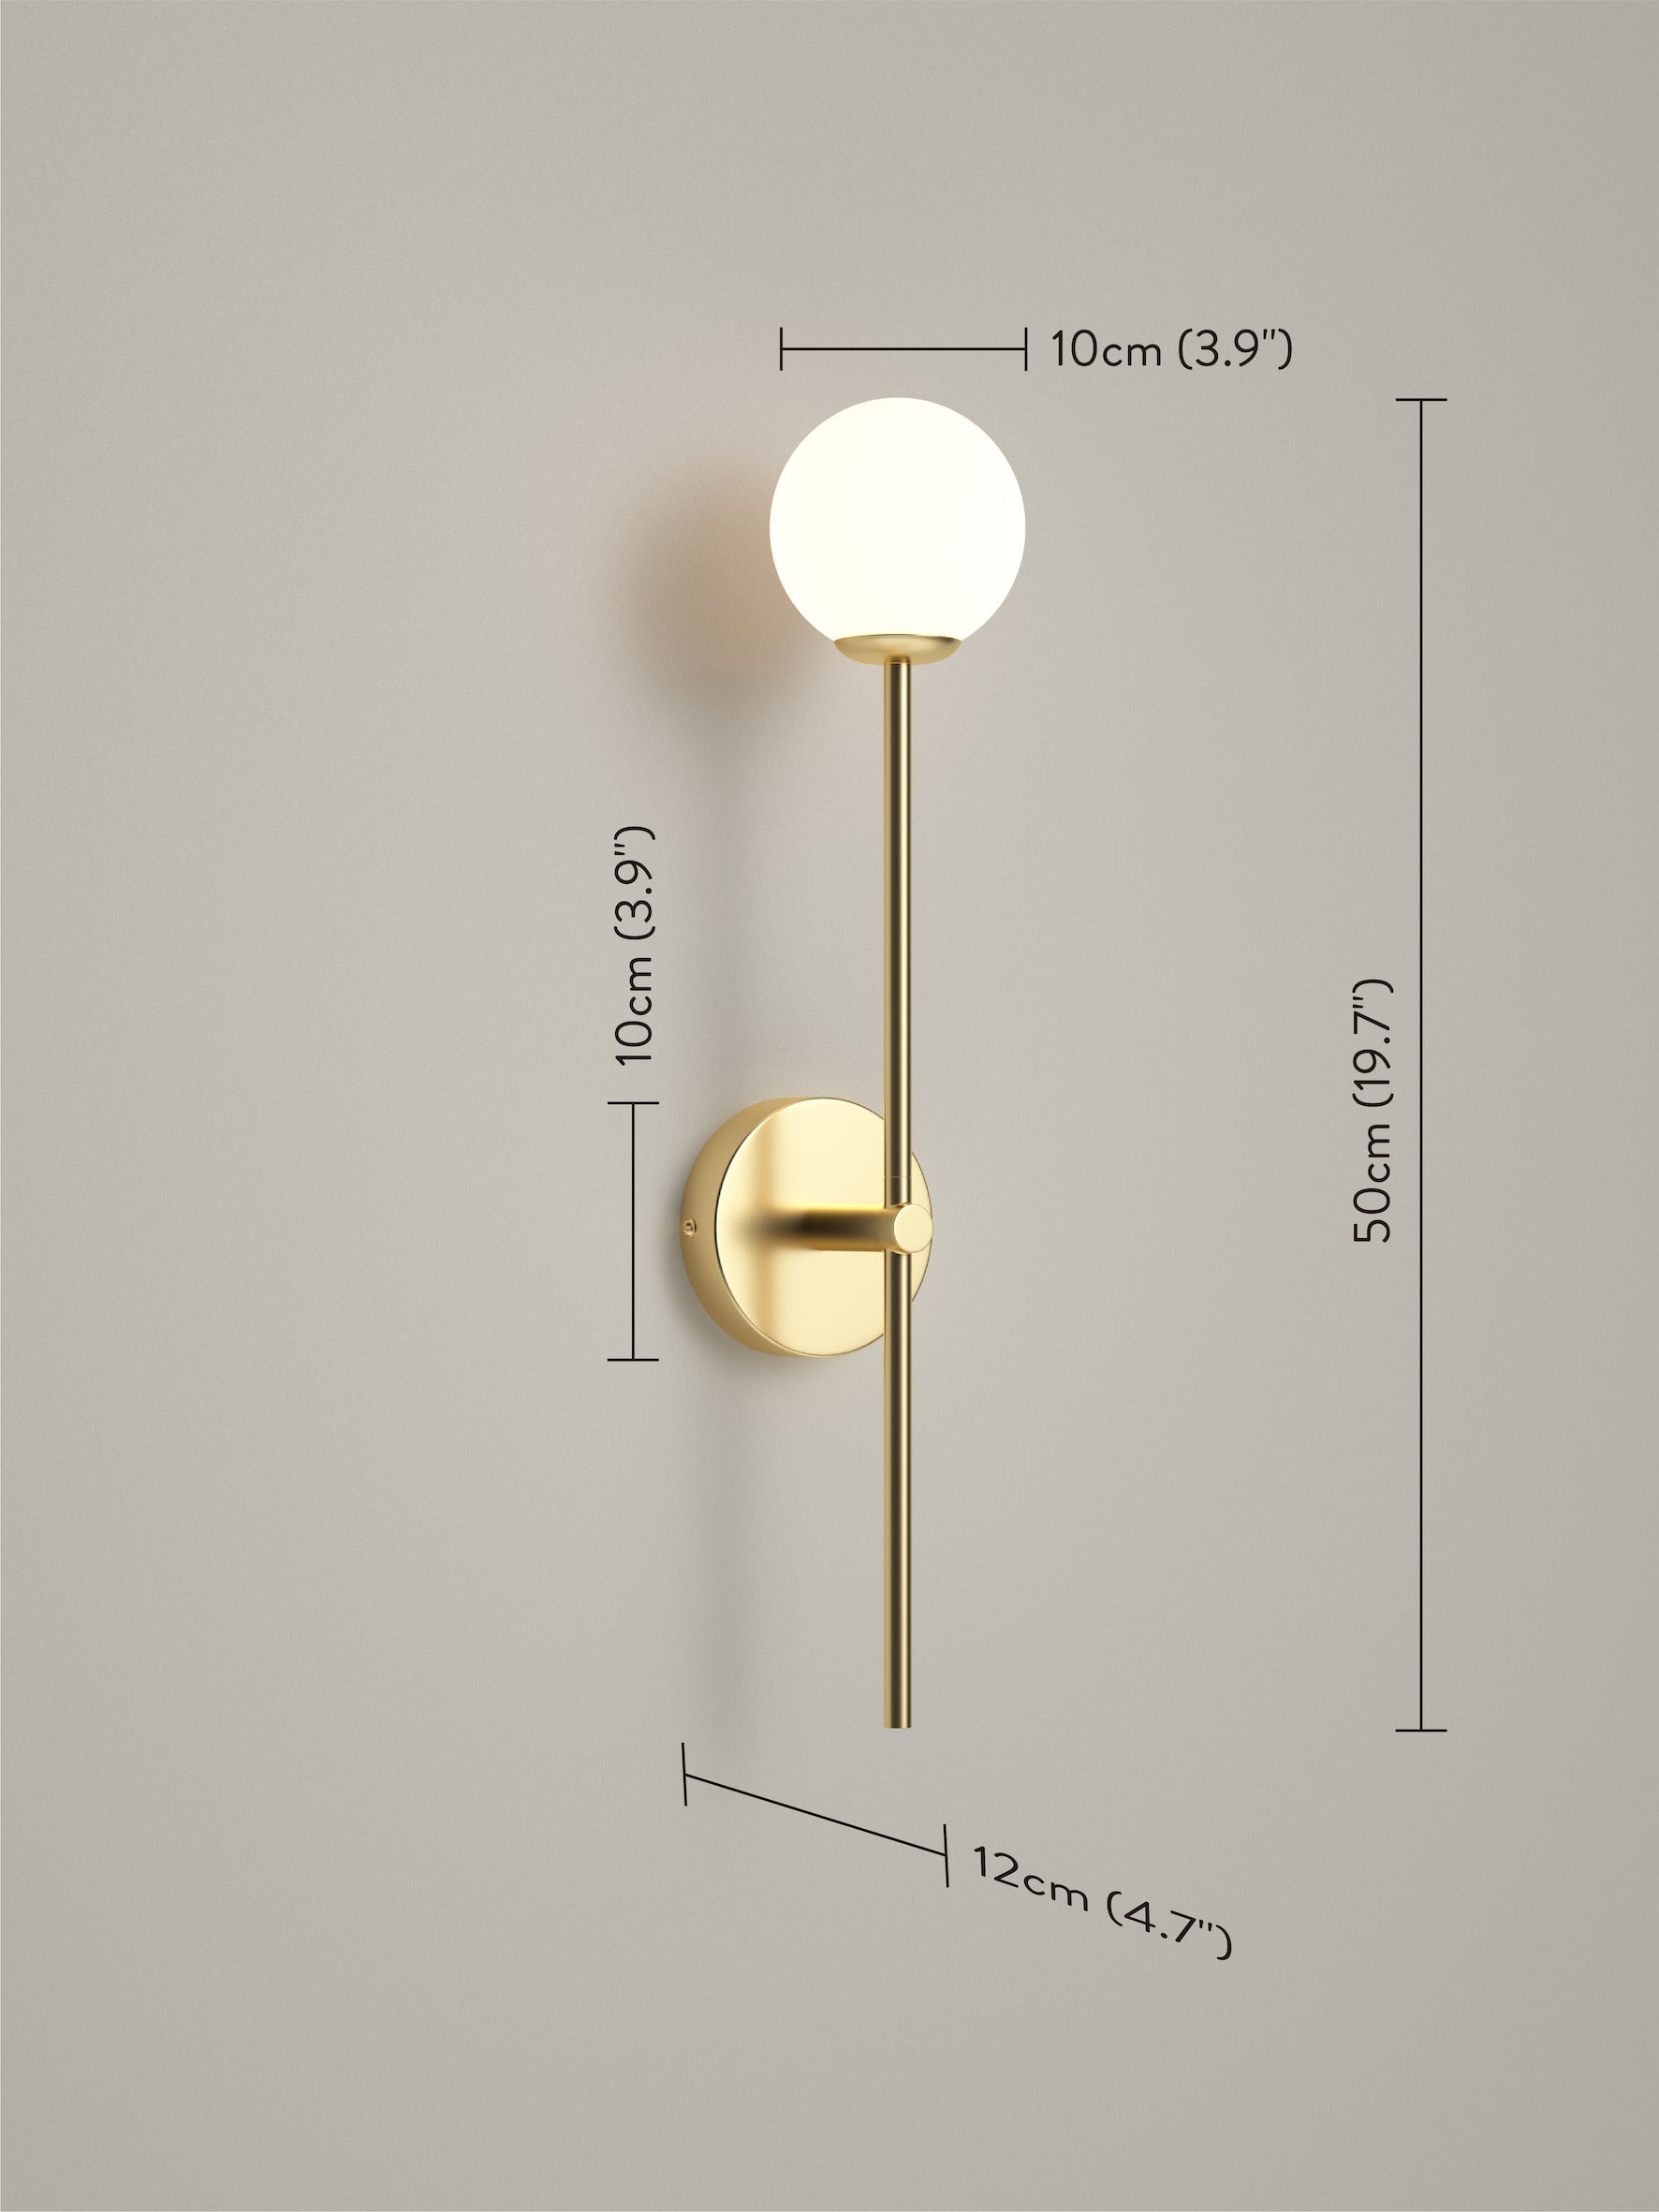 Chelso - brushed brass and opal wall light | Wall Light | Lights & Lamps | UK | Modern Affordable Designer Lighting